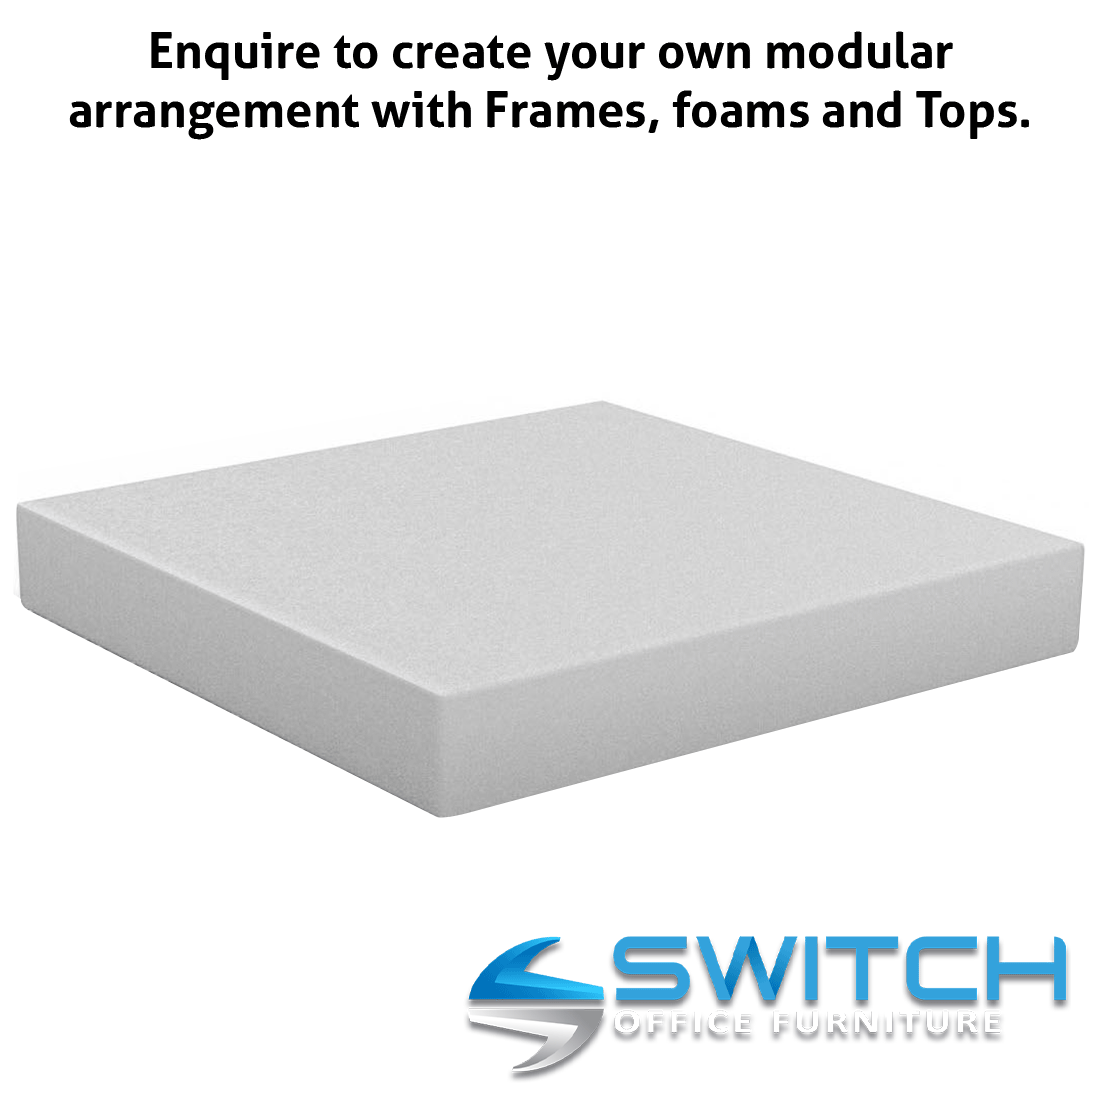 Zelig Modular Lounge System - switchoffice.com.au